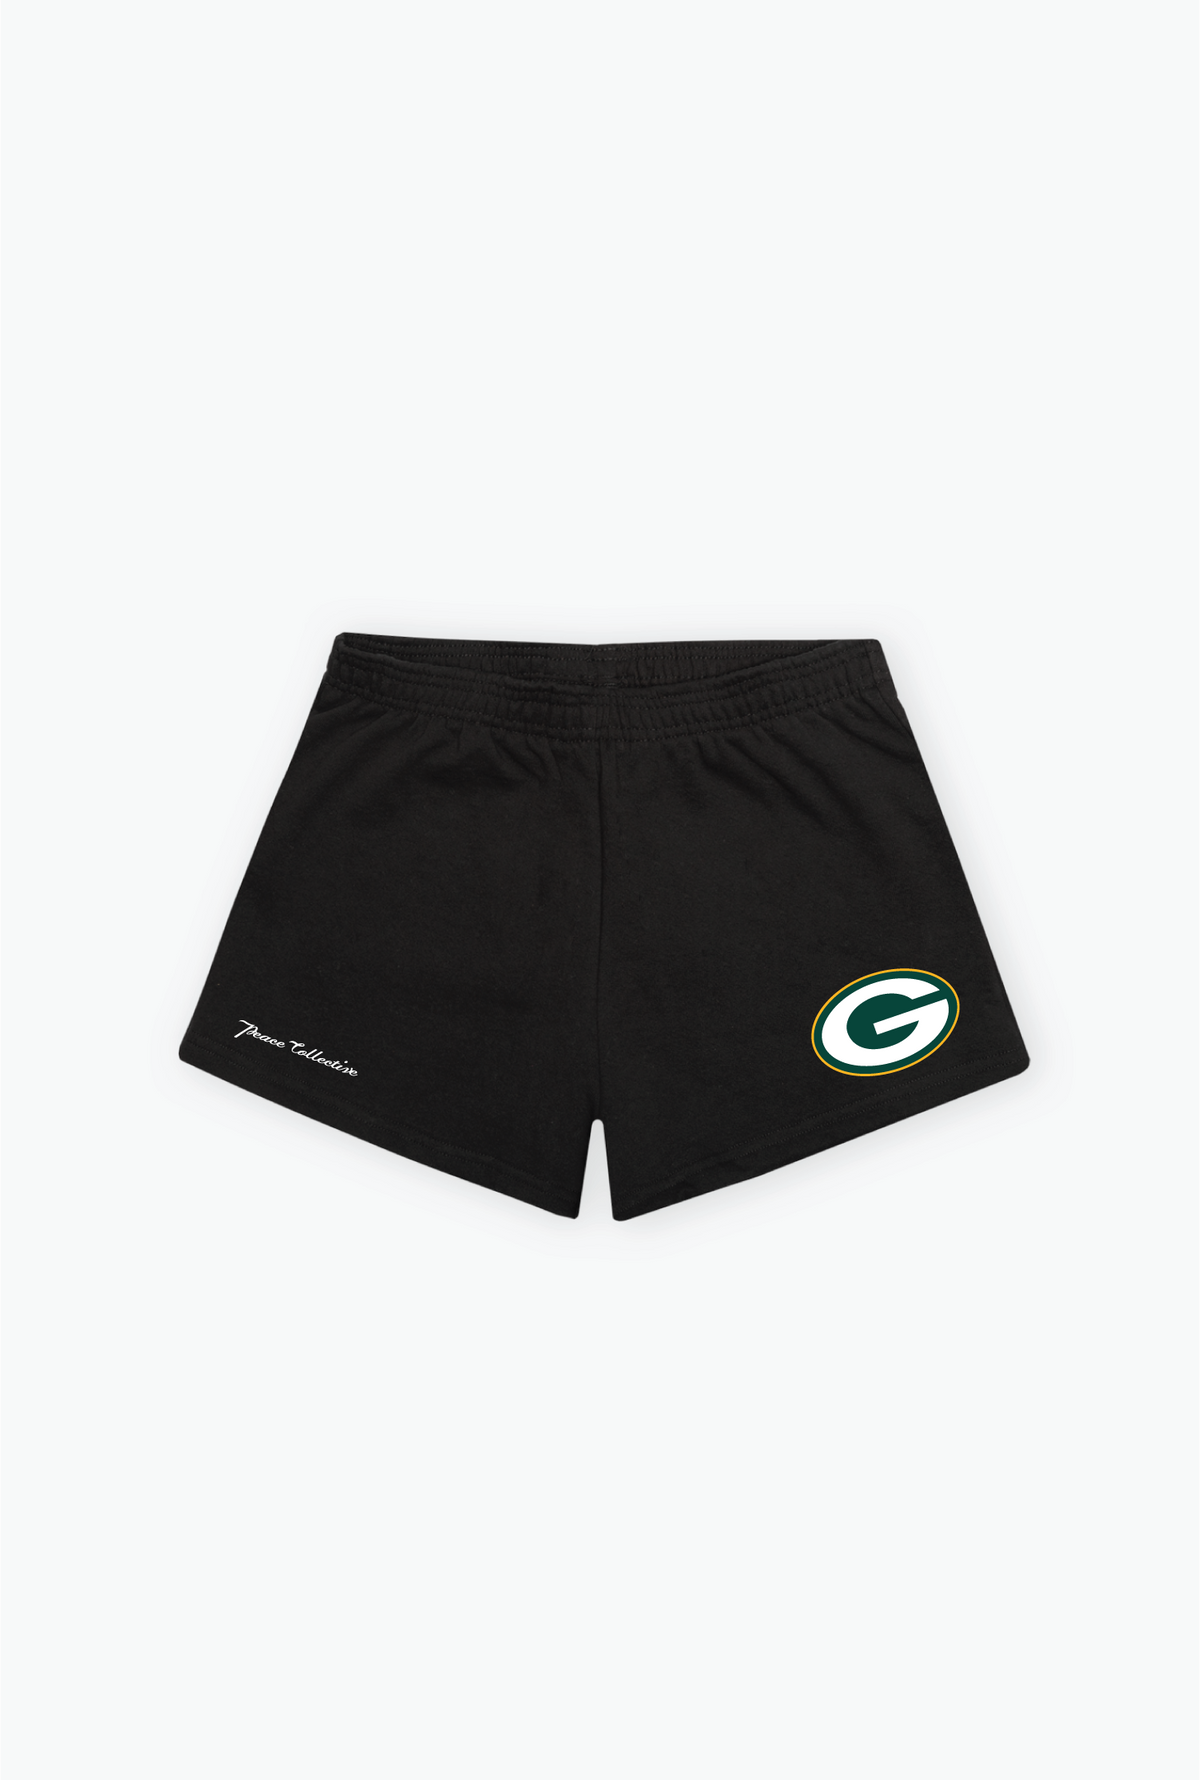 Green Bay Packers Women's Fleece Shorts - Black